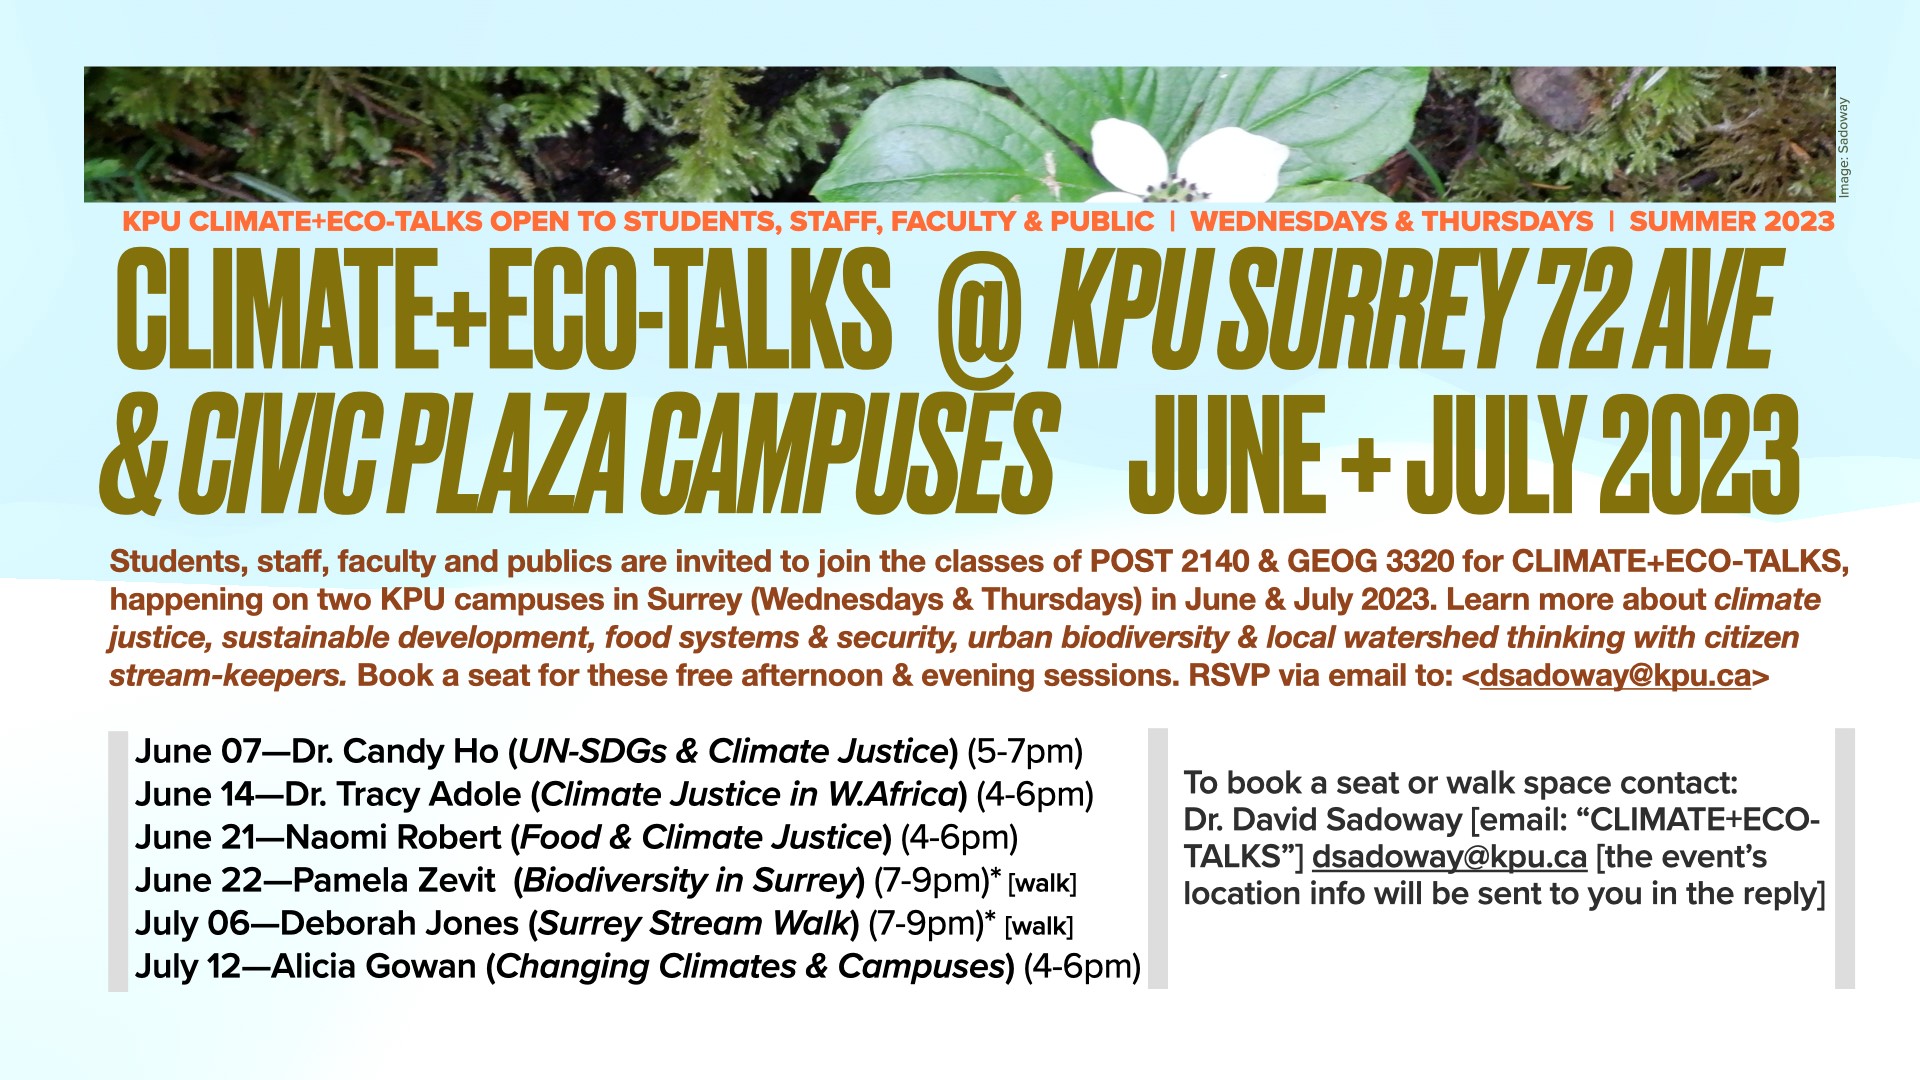 CLIMATE+ECO-TALKS @ KPU Surrey 72 Ave &amp; Civic Plaza Campuses June+July 2023